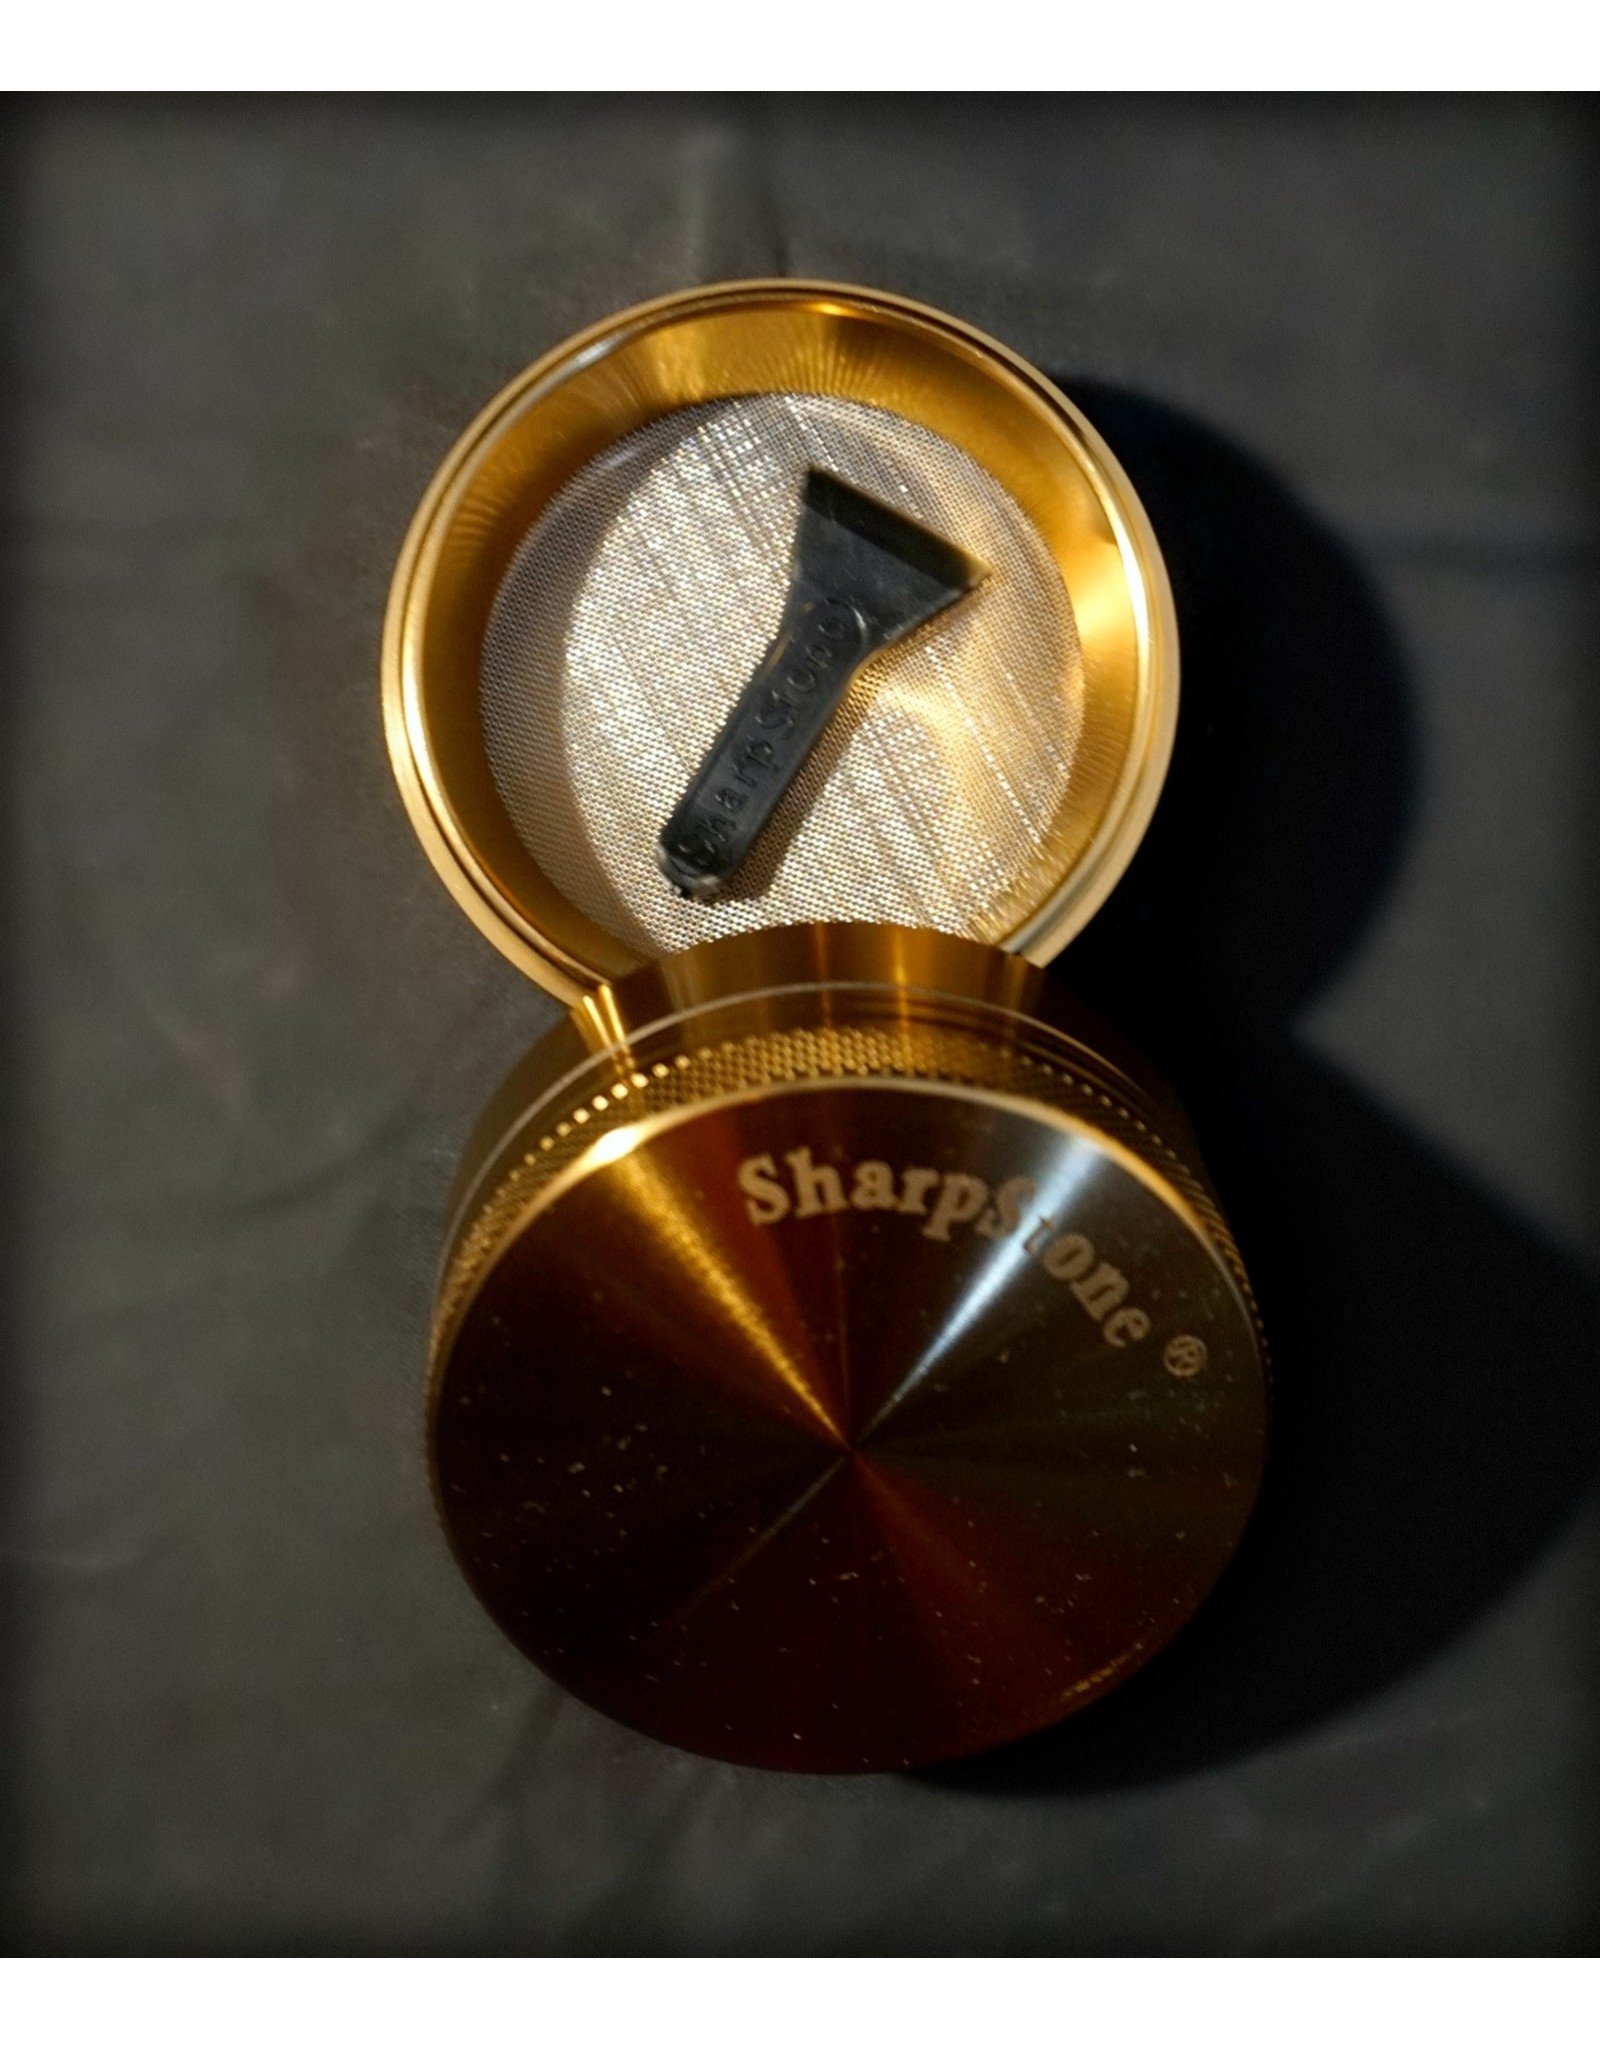 Sharpstone Sharpstone 2.2" 4pc - Brown